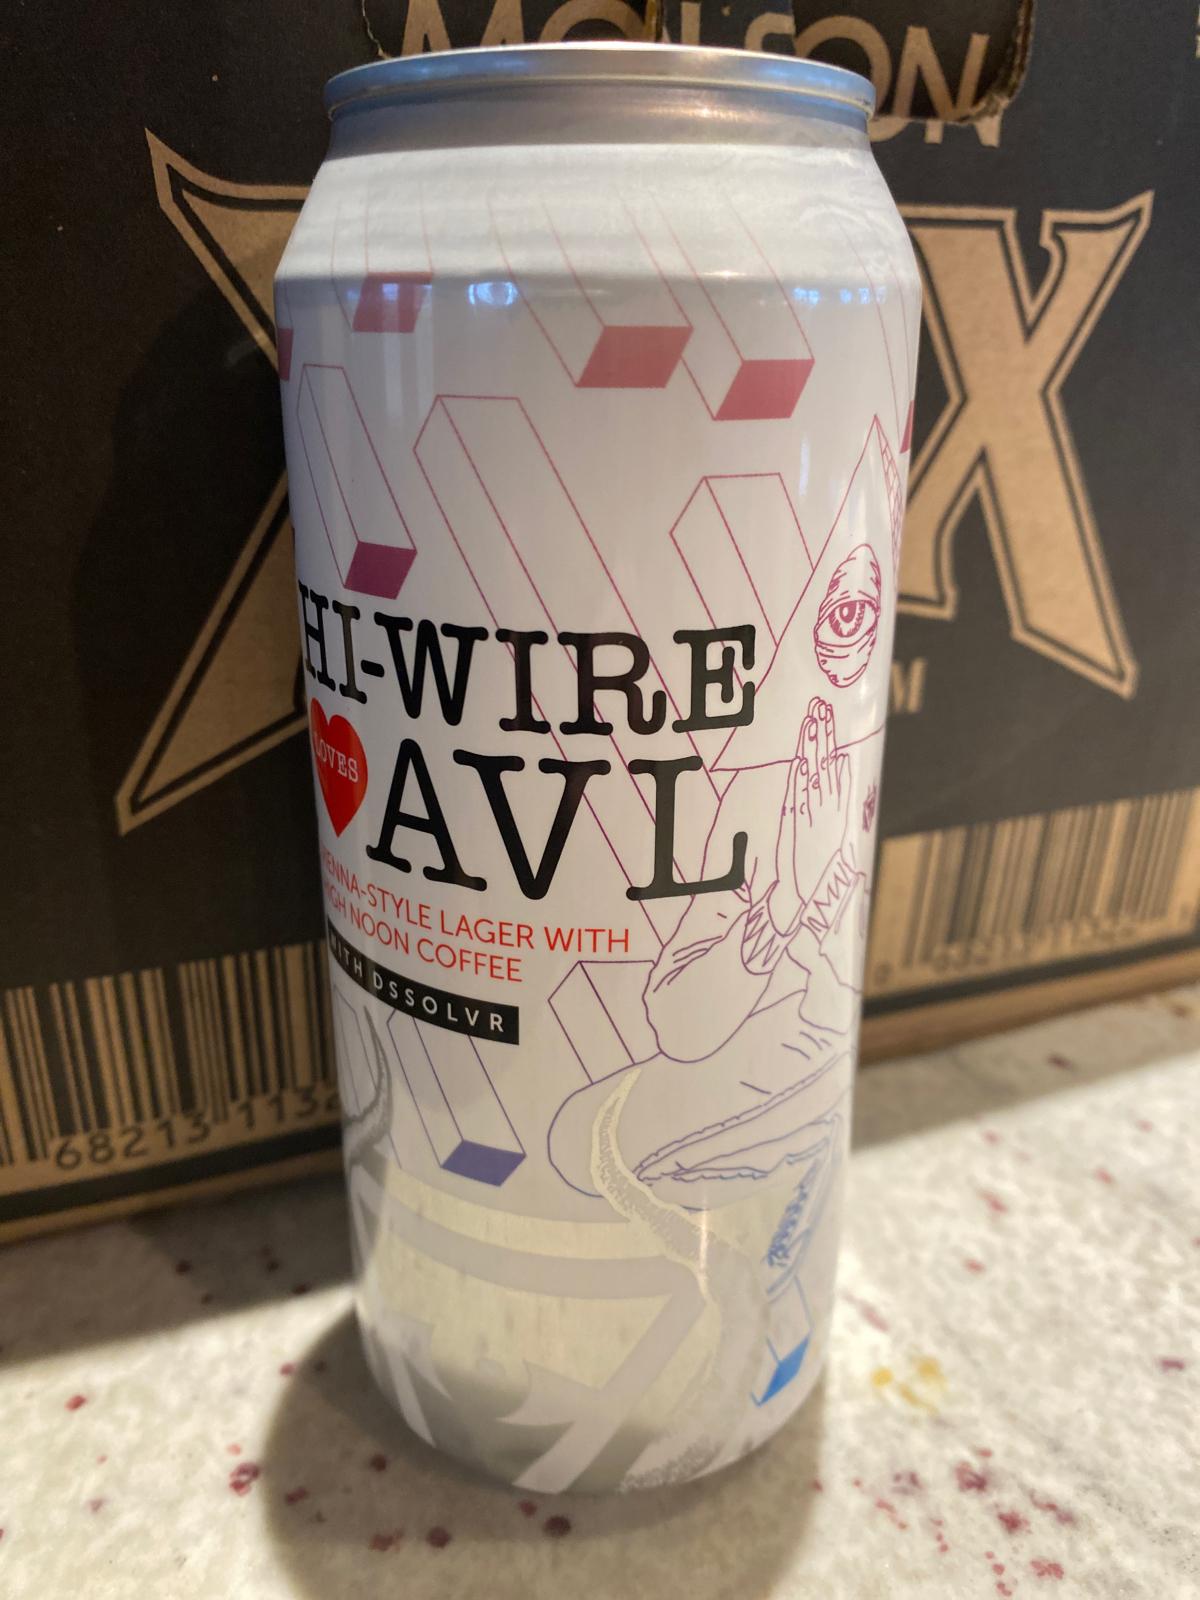 Hi-Wire Loves AVL